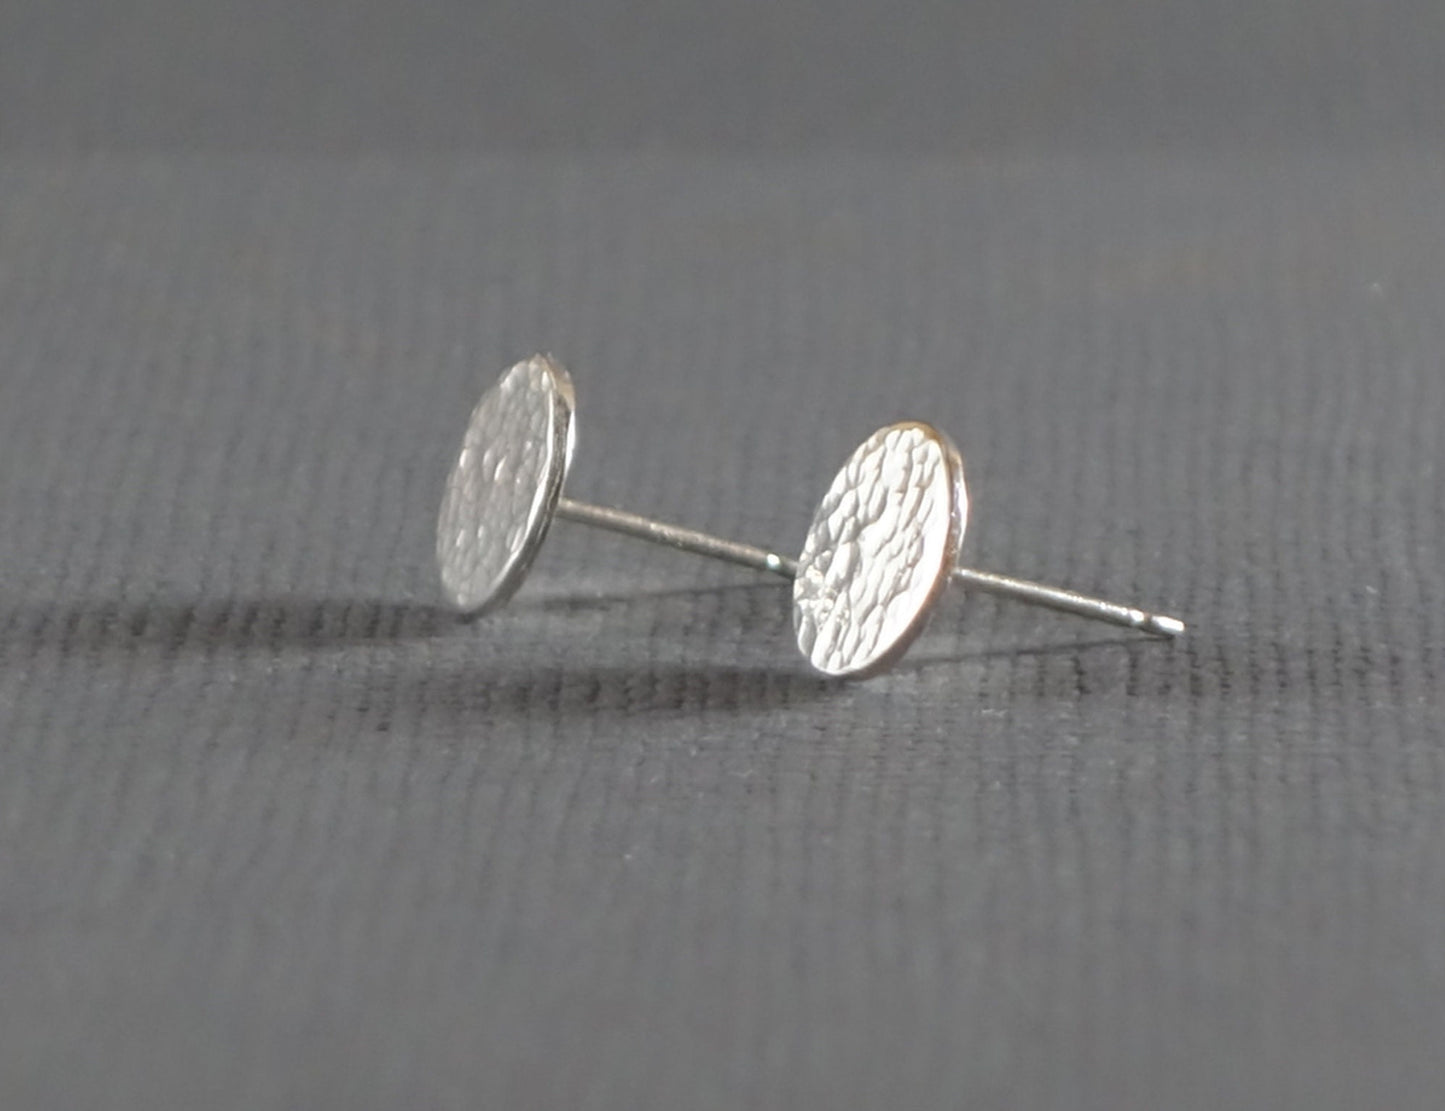 Silver Circle Studs, Shiny Silver Circle Post Earrings